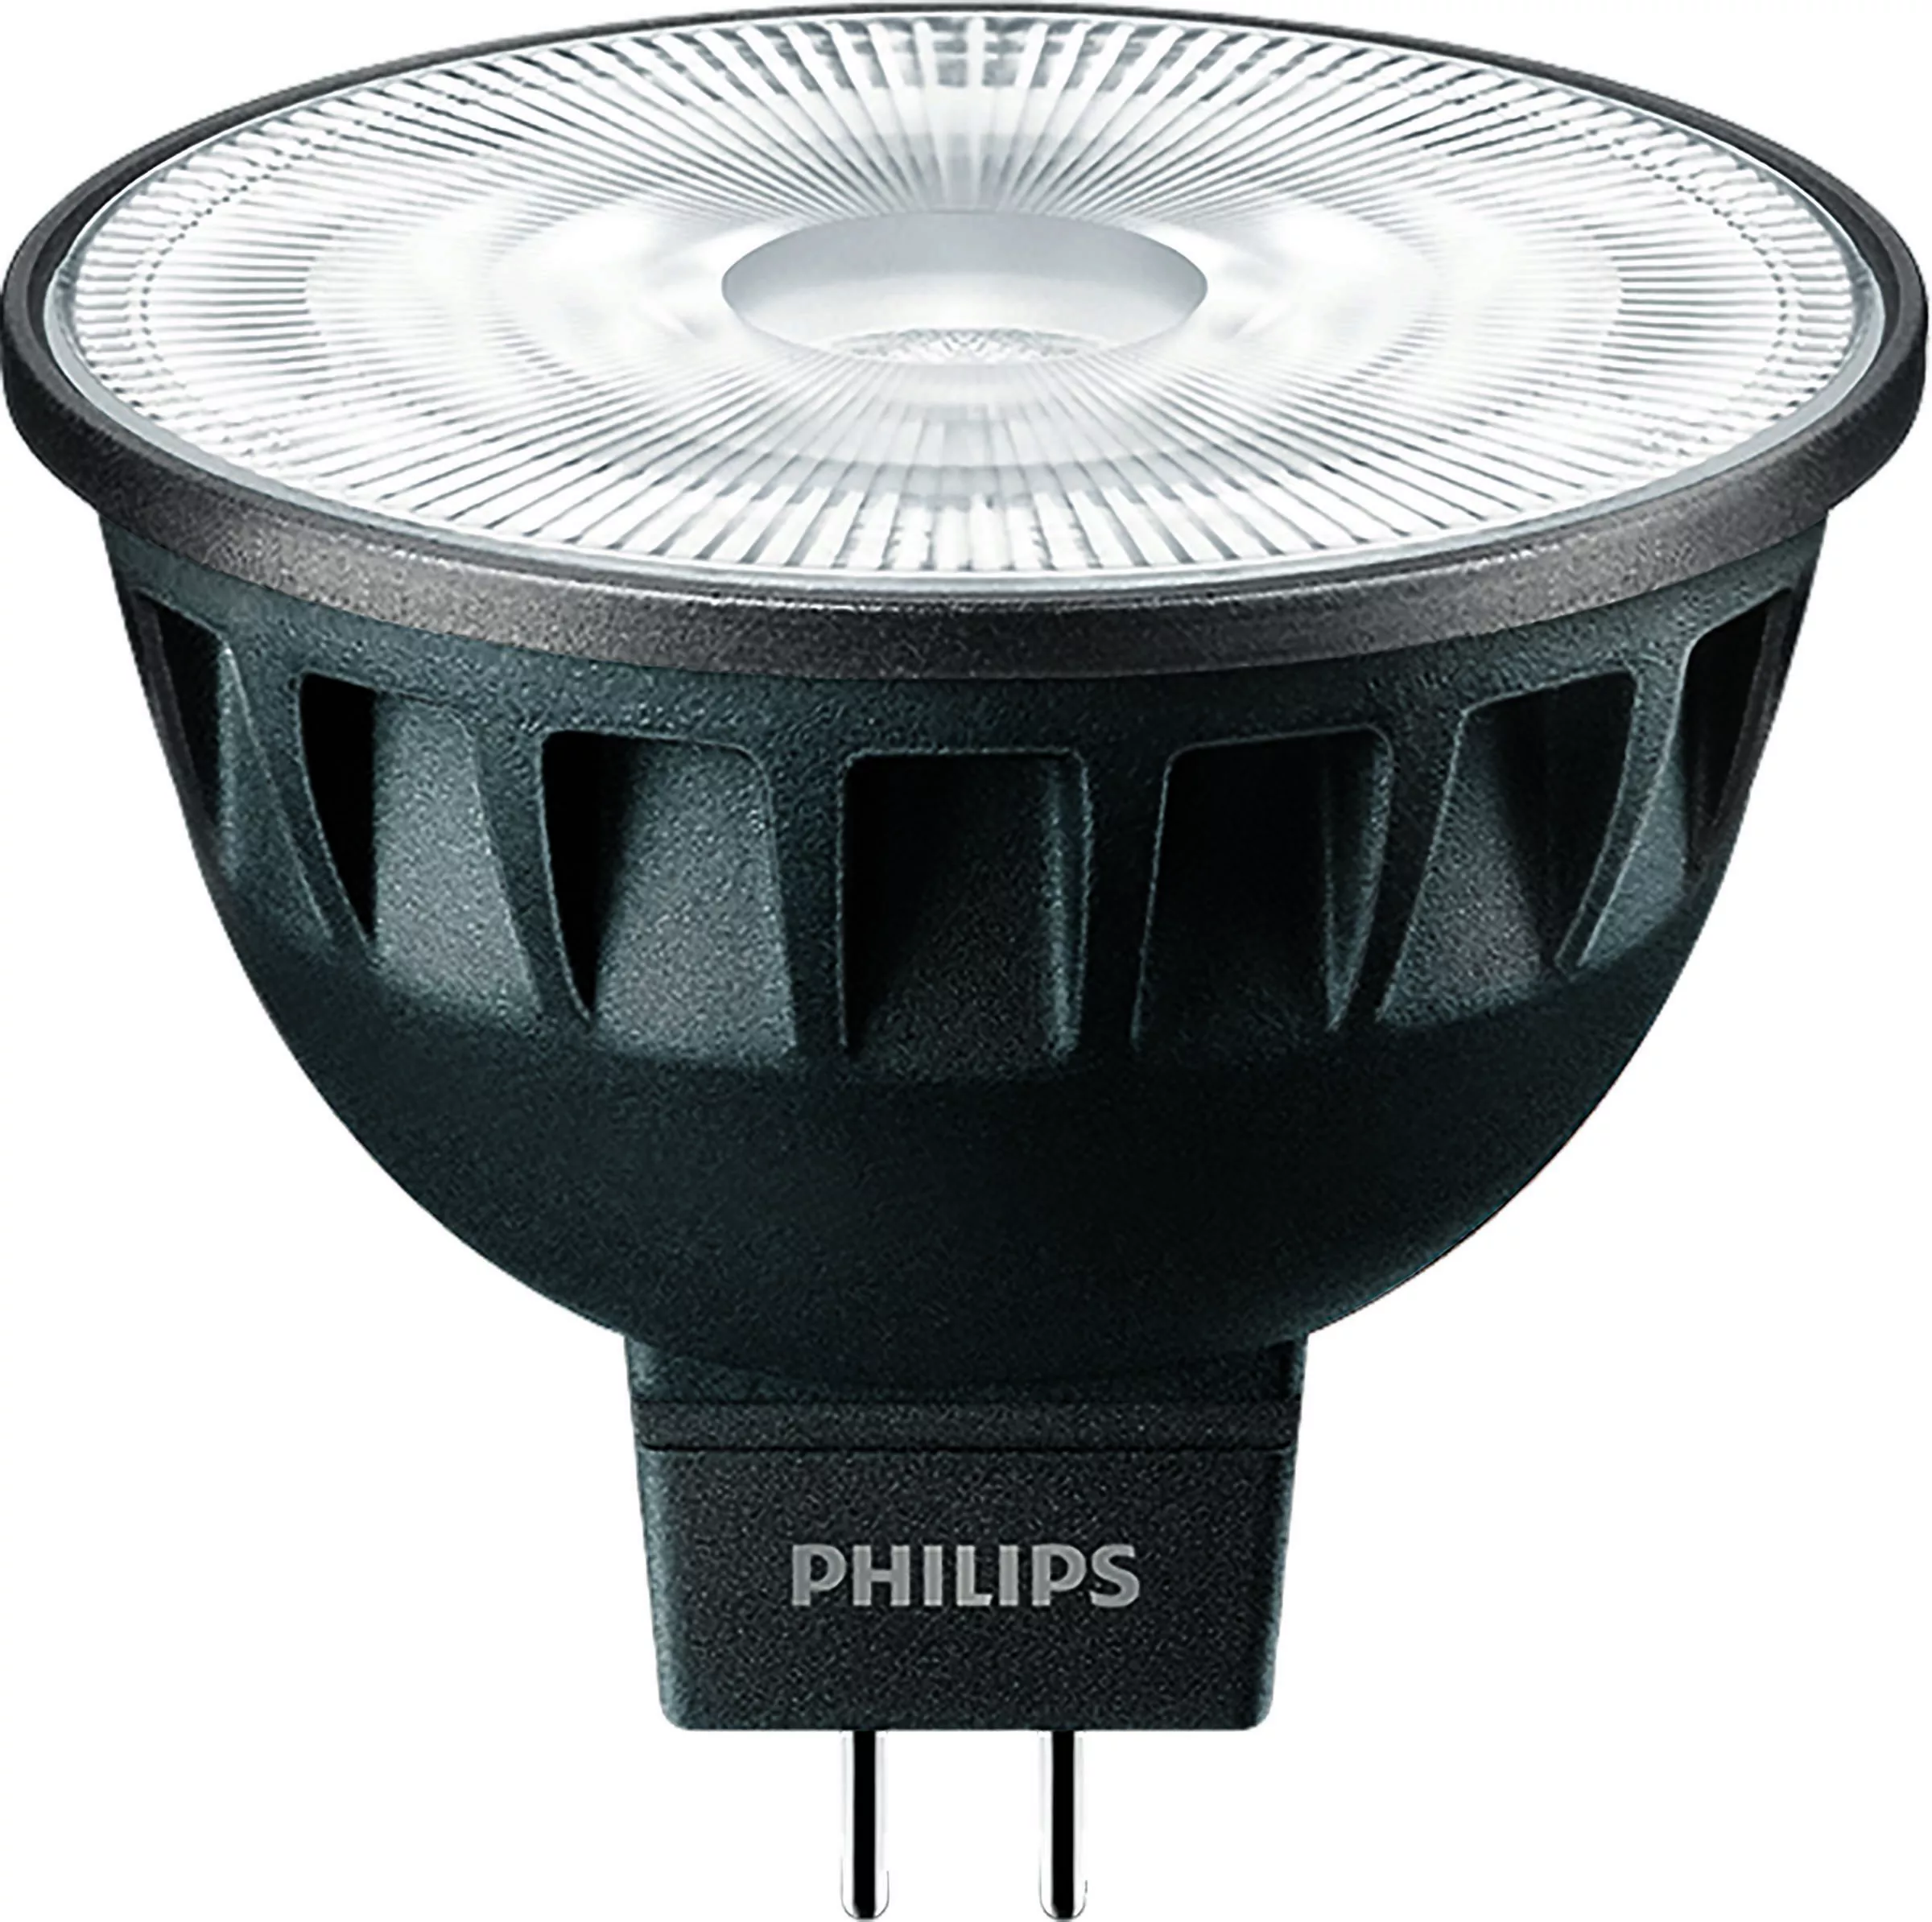 Philips Lighting LED-Reflektorlampr MR16 GU5.3 927 DIM MAS LED Exp#35877500 günstig online kaufen